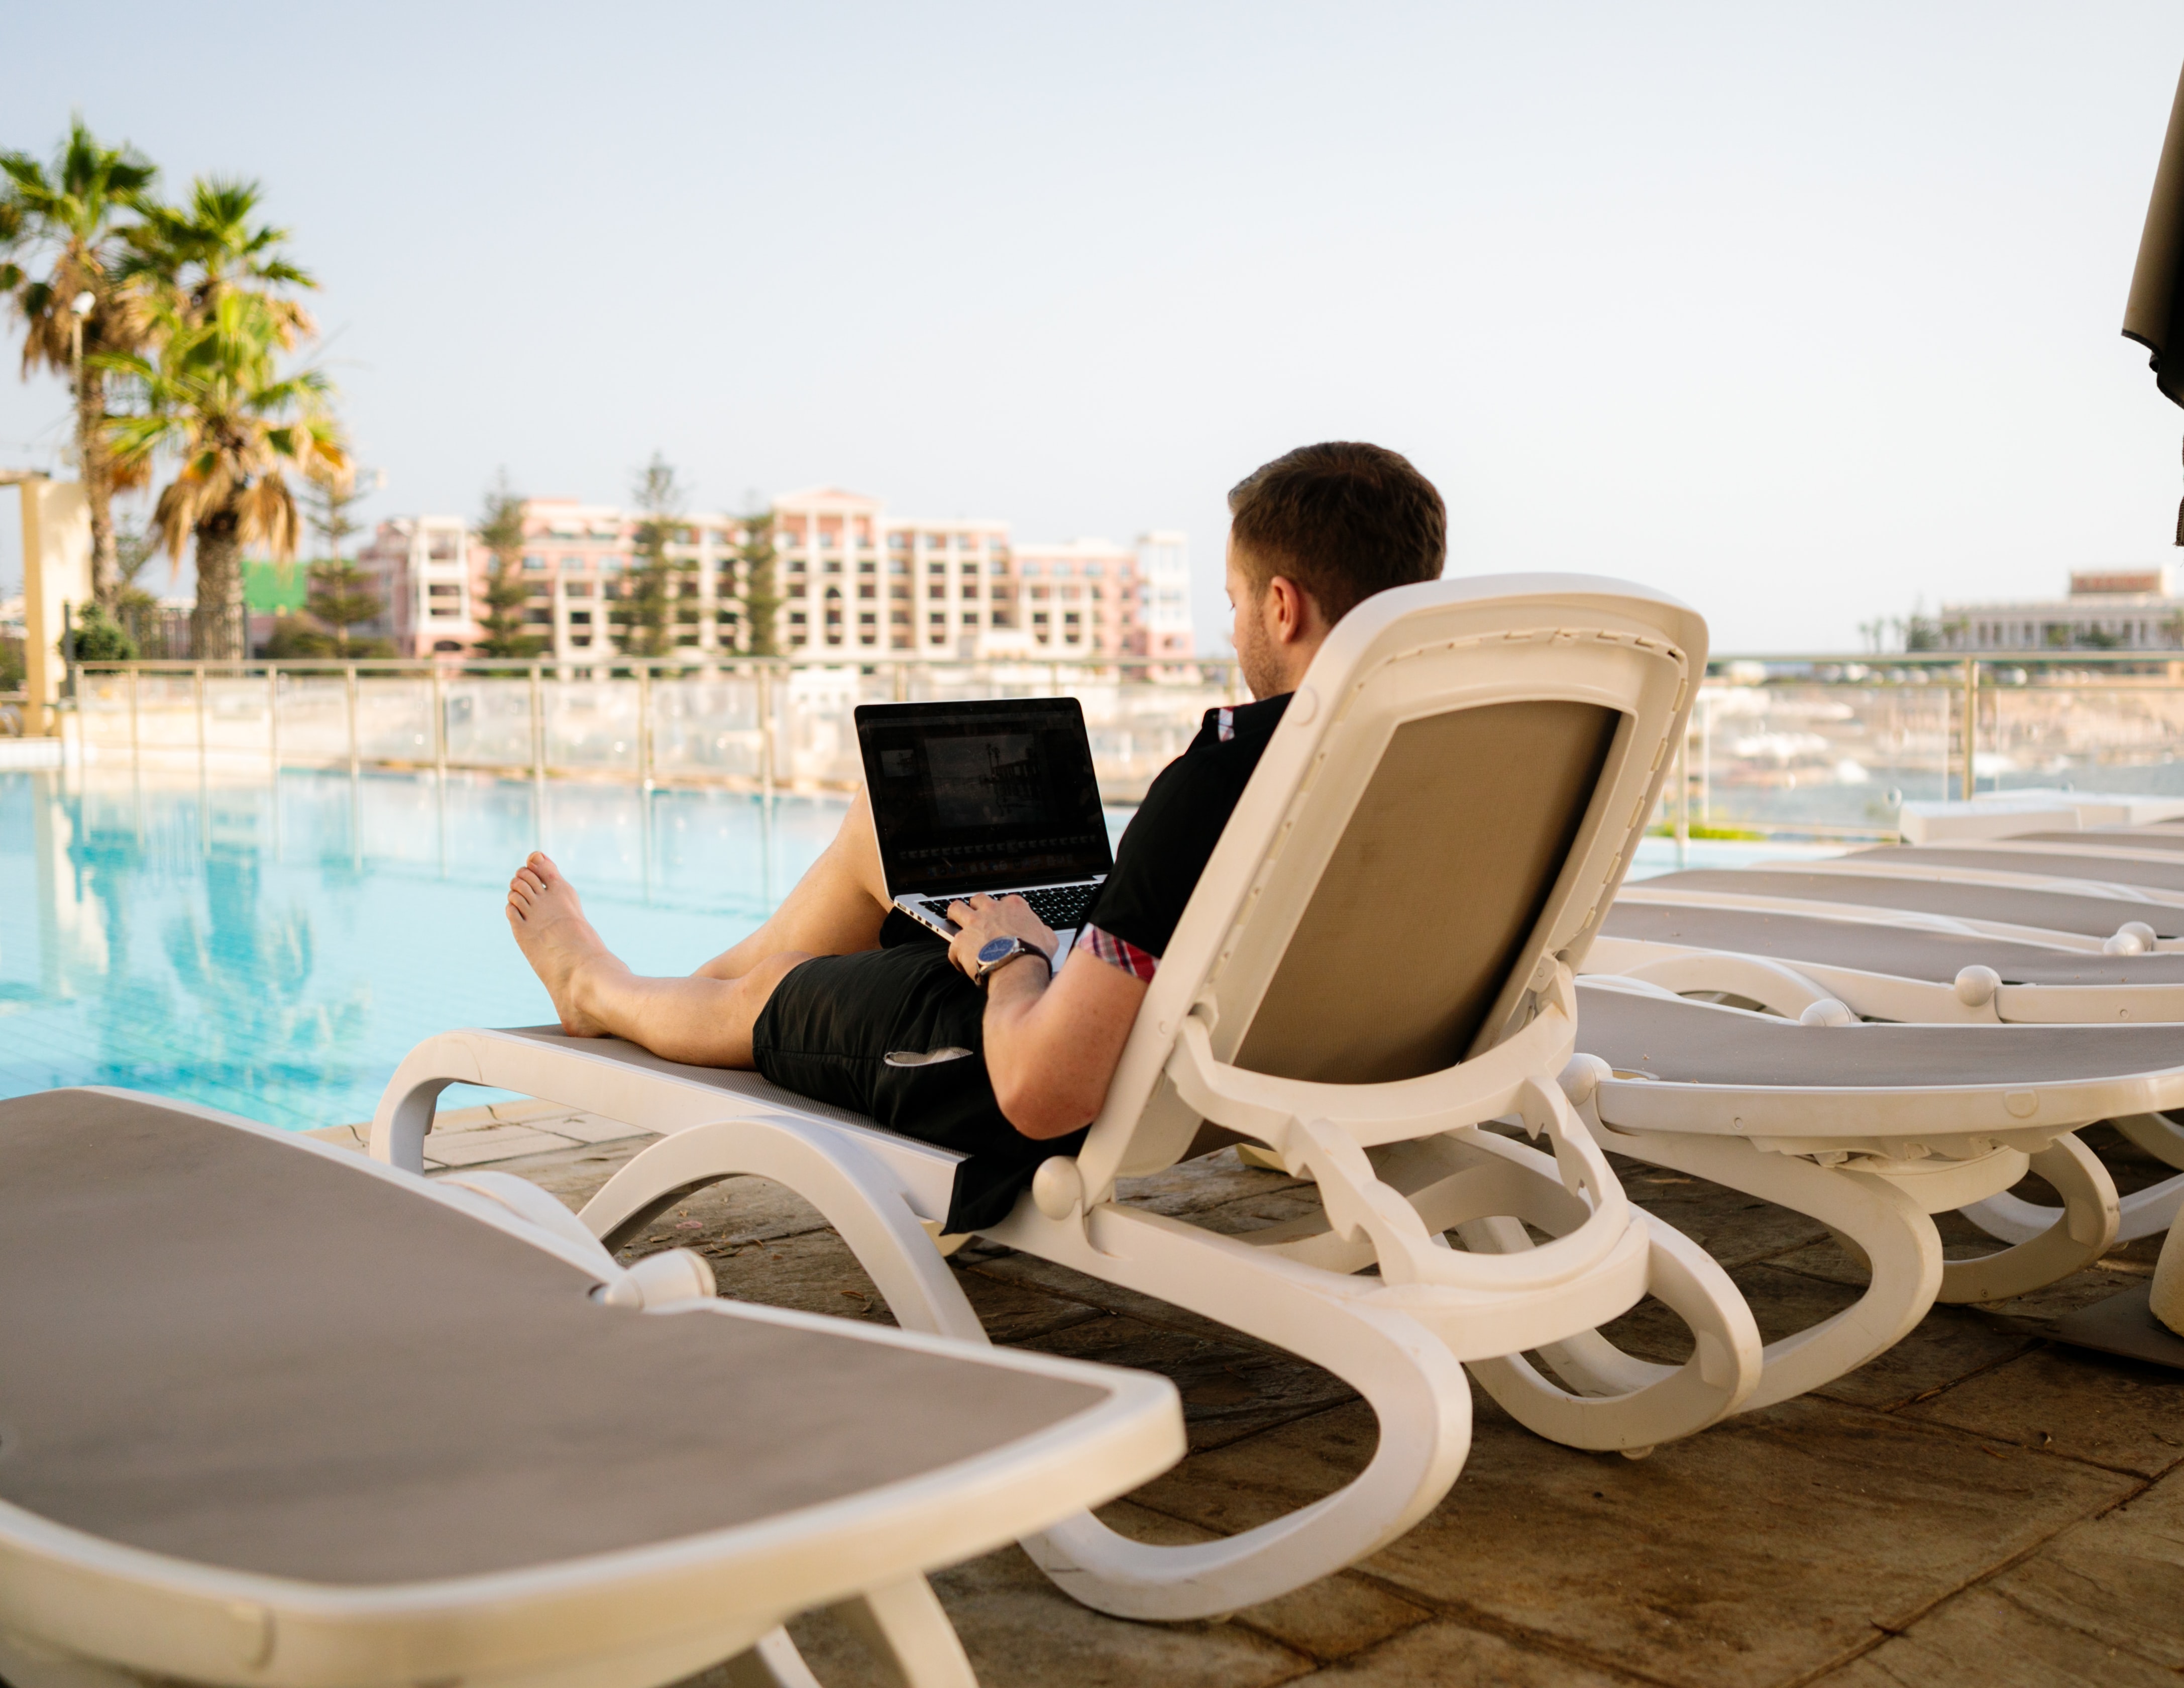 Life of a digital nomad, work and travel lifestyle. Man on sun lounger using laptop. Image by Humphrey Muleba, via Unsplash.com.